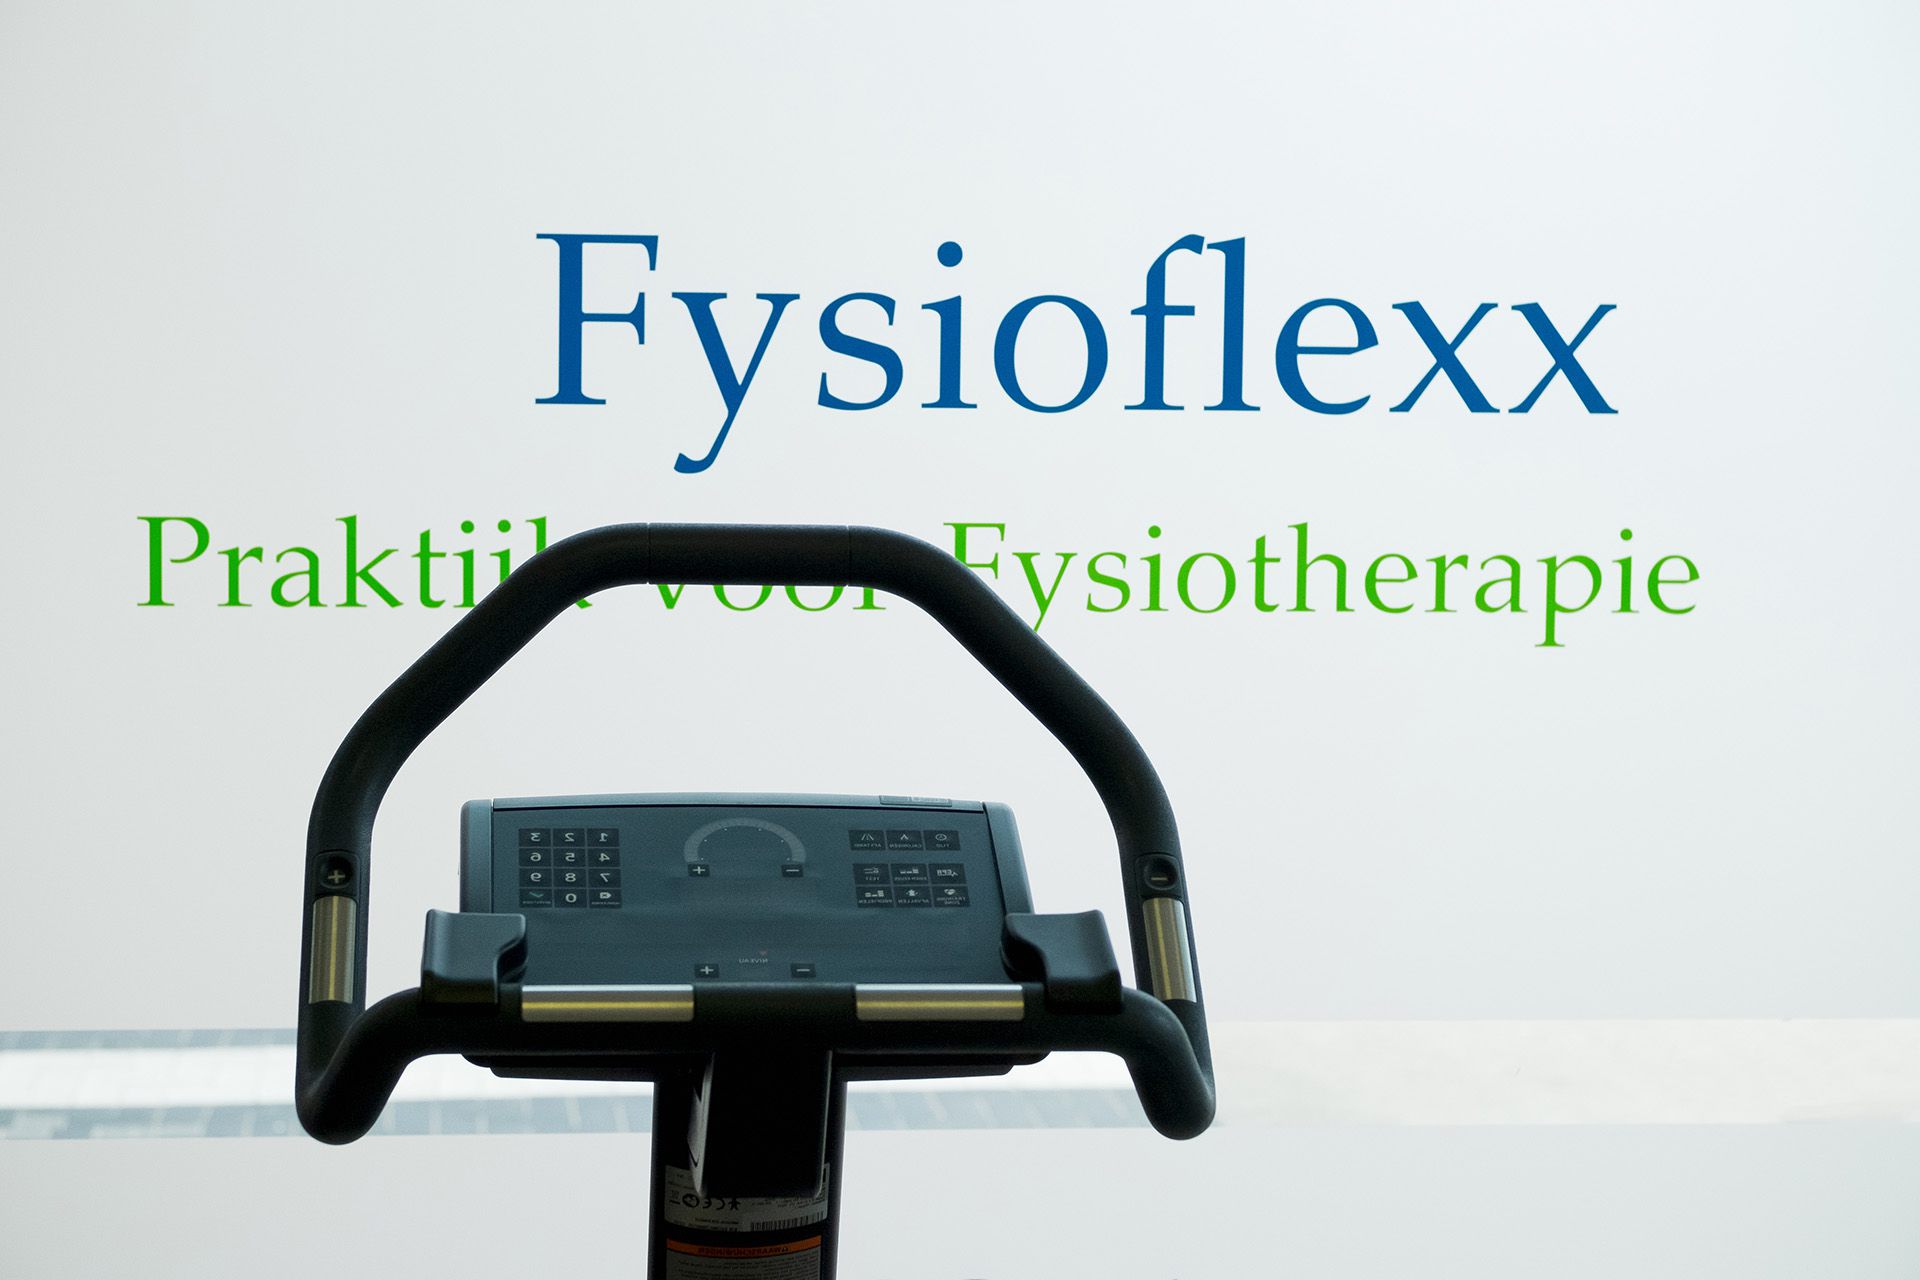 Fysioflexx over